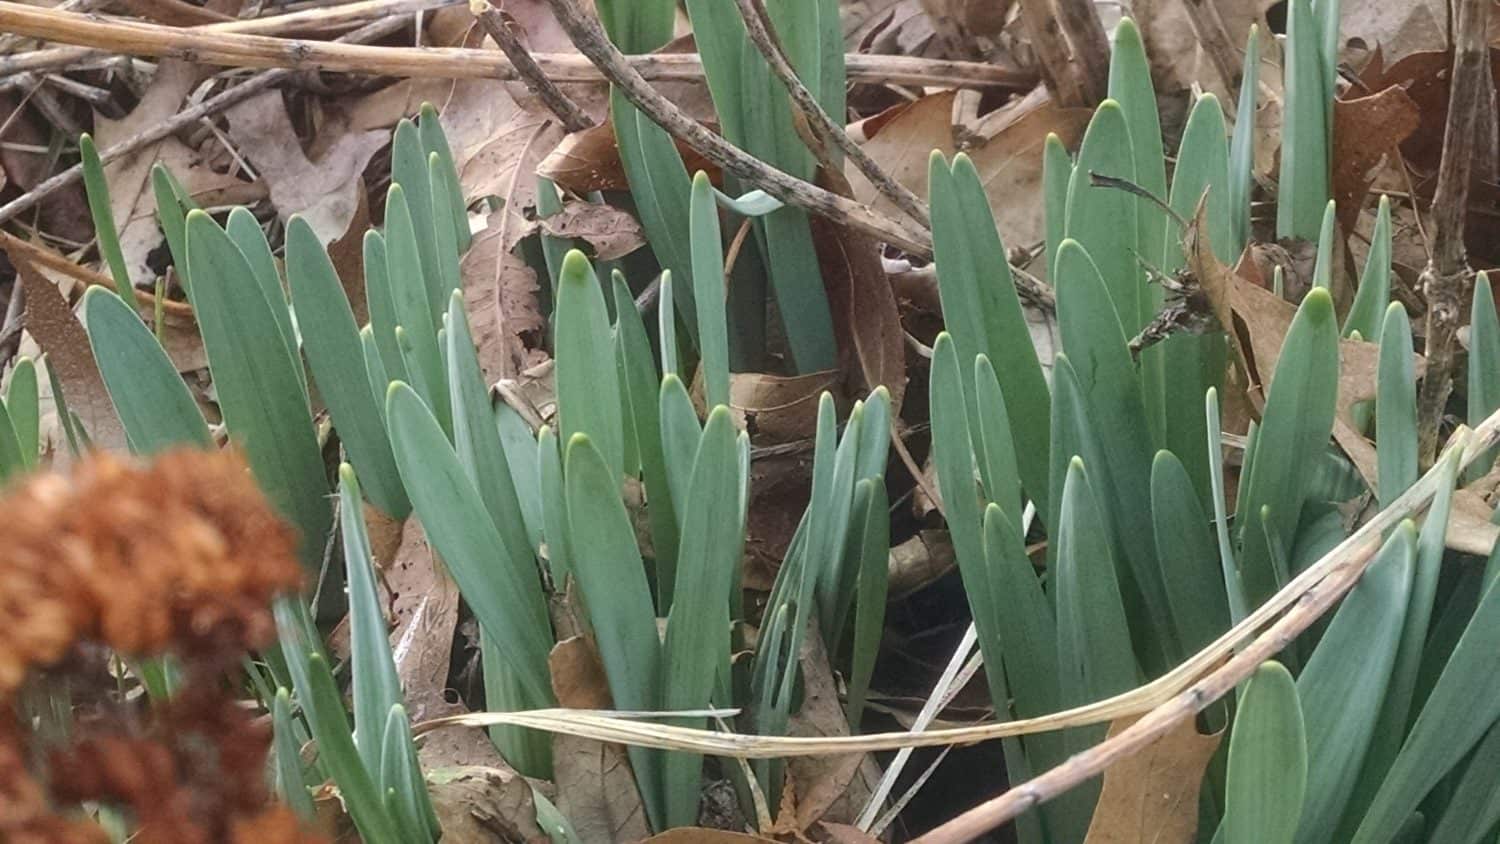 Daffodils in March